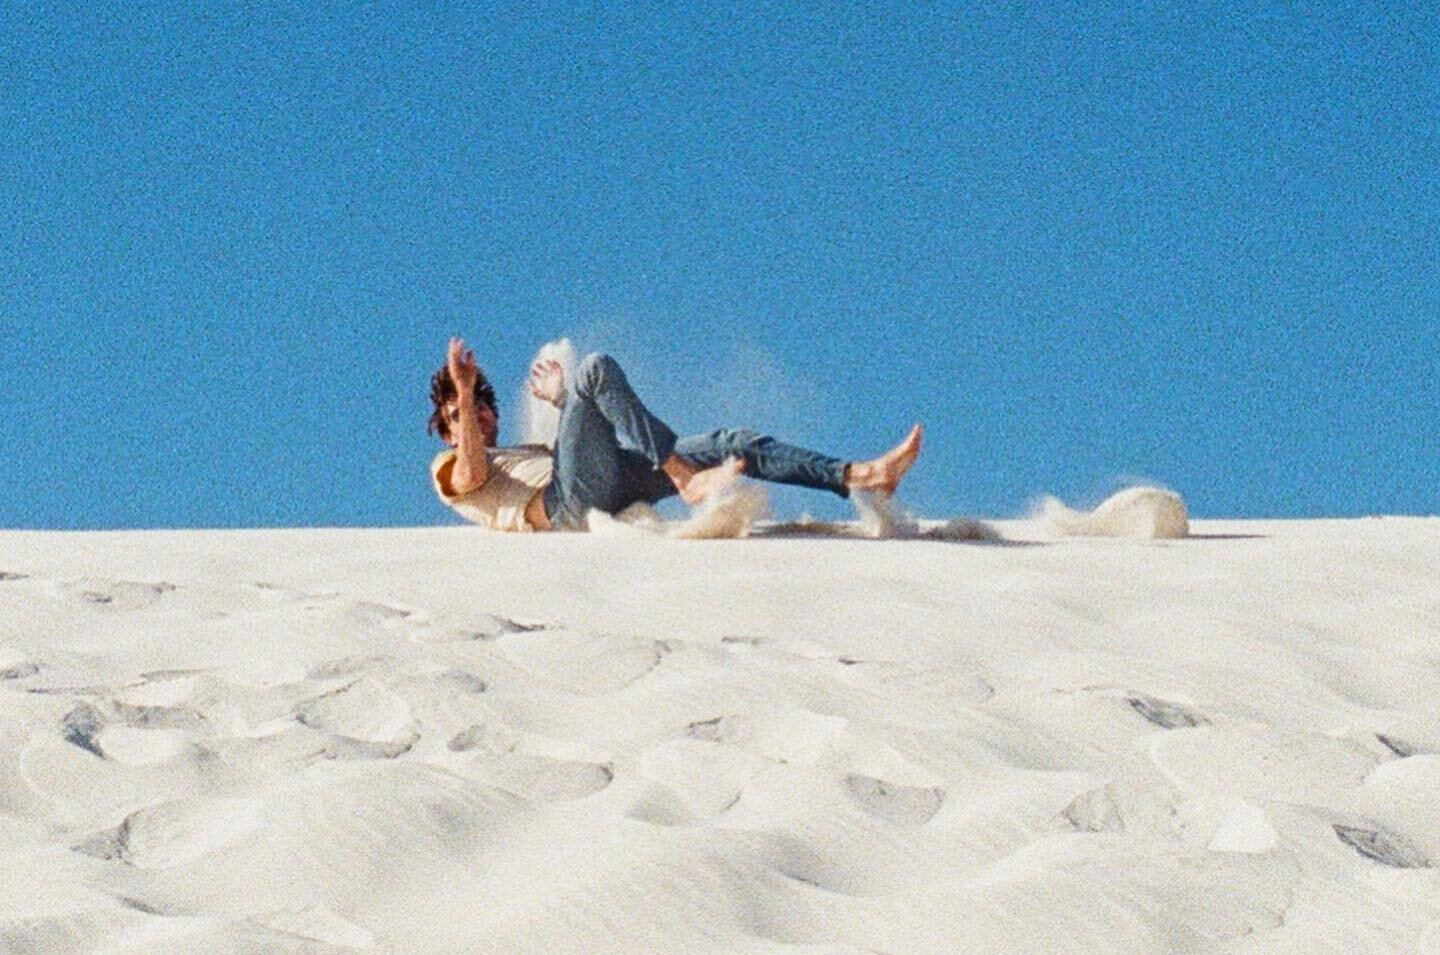 〽️oving through dunes

#surrealist #photography #dunes #whitesandsnationalpark